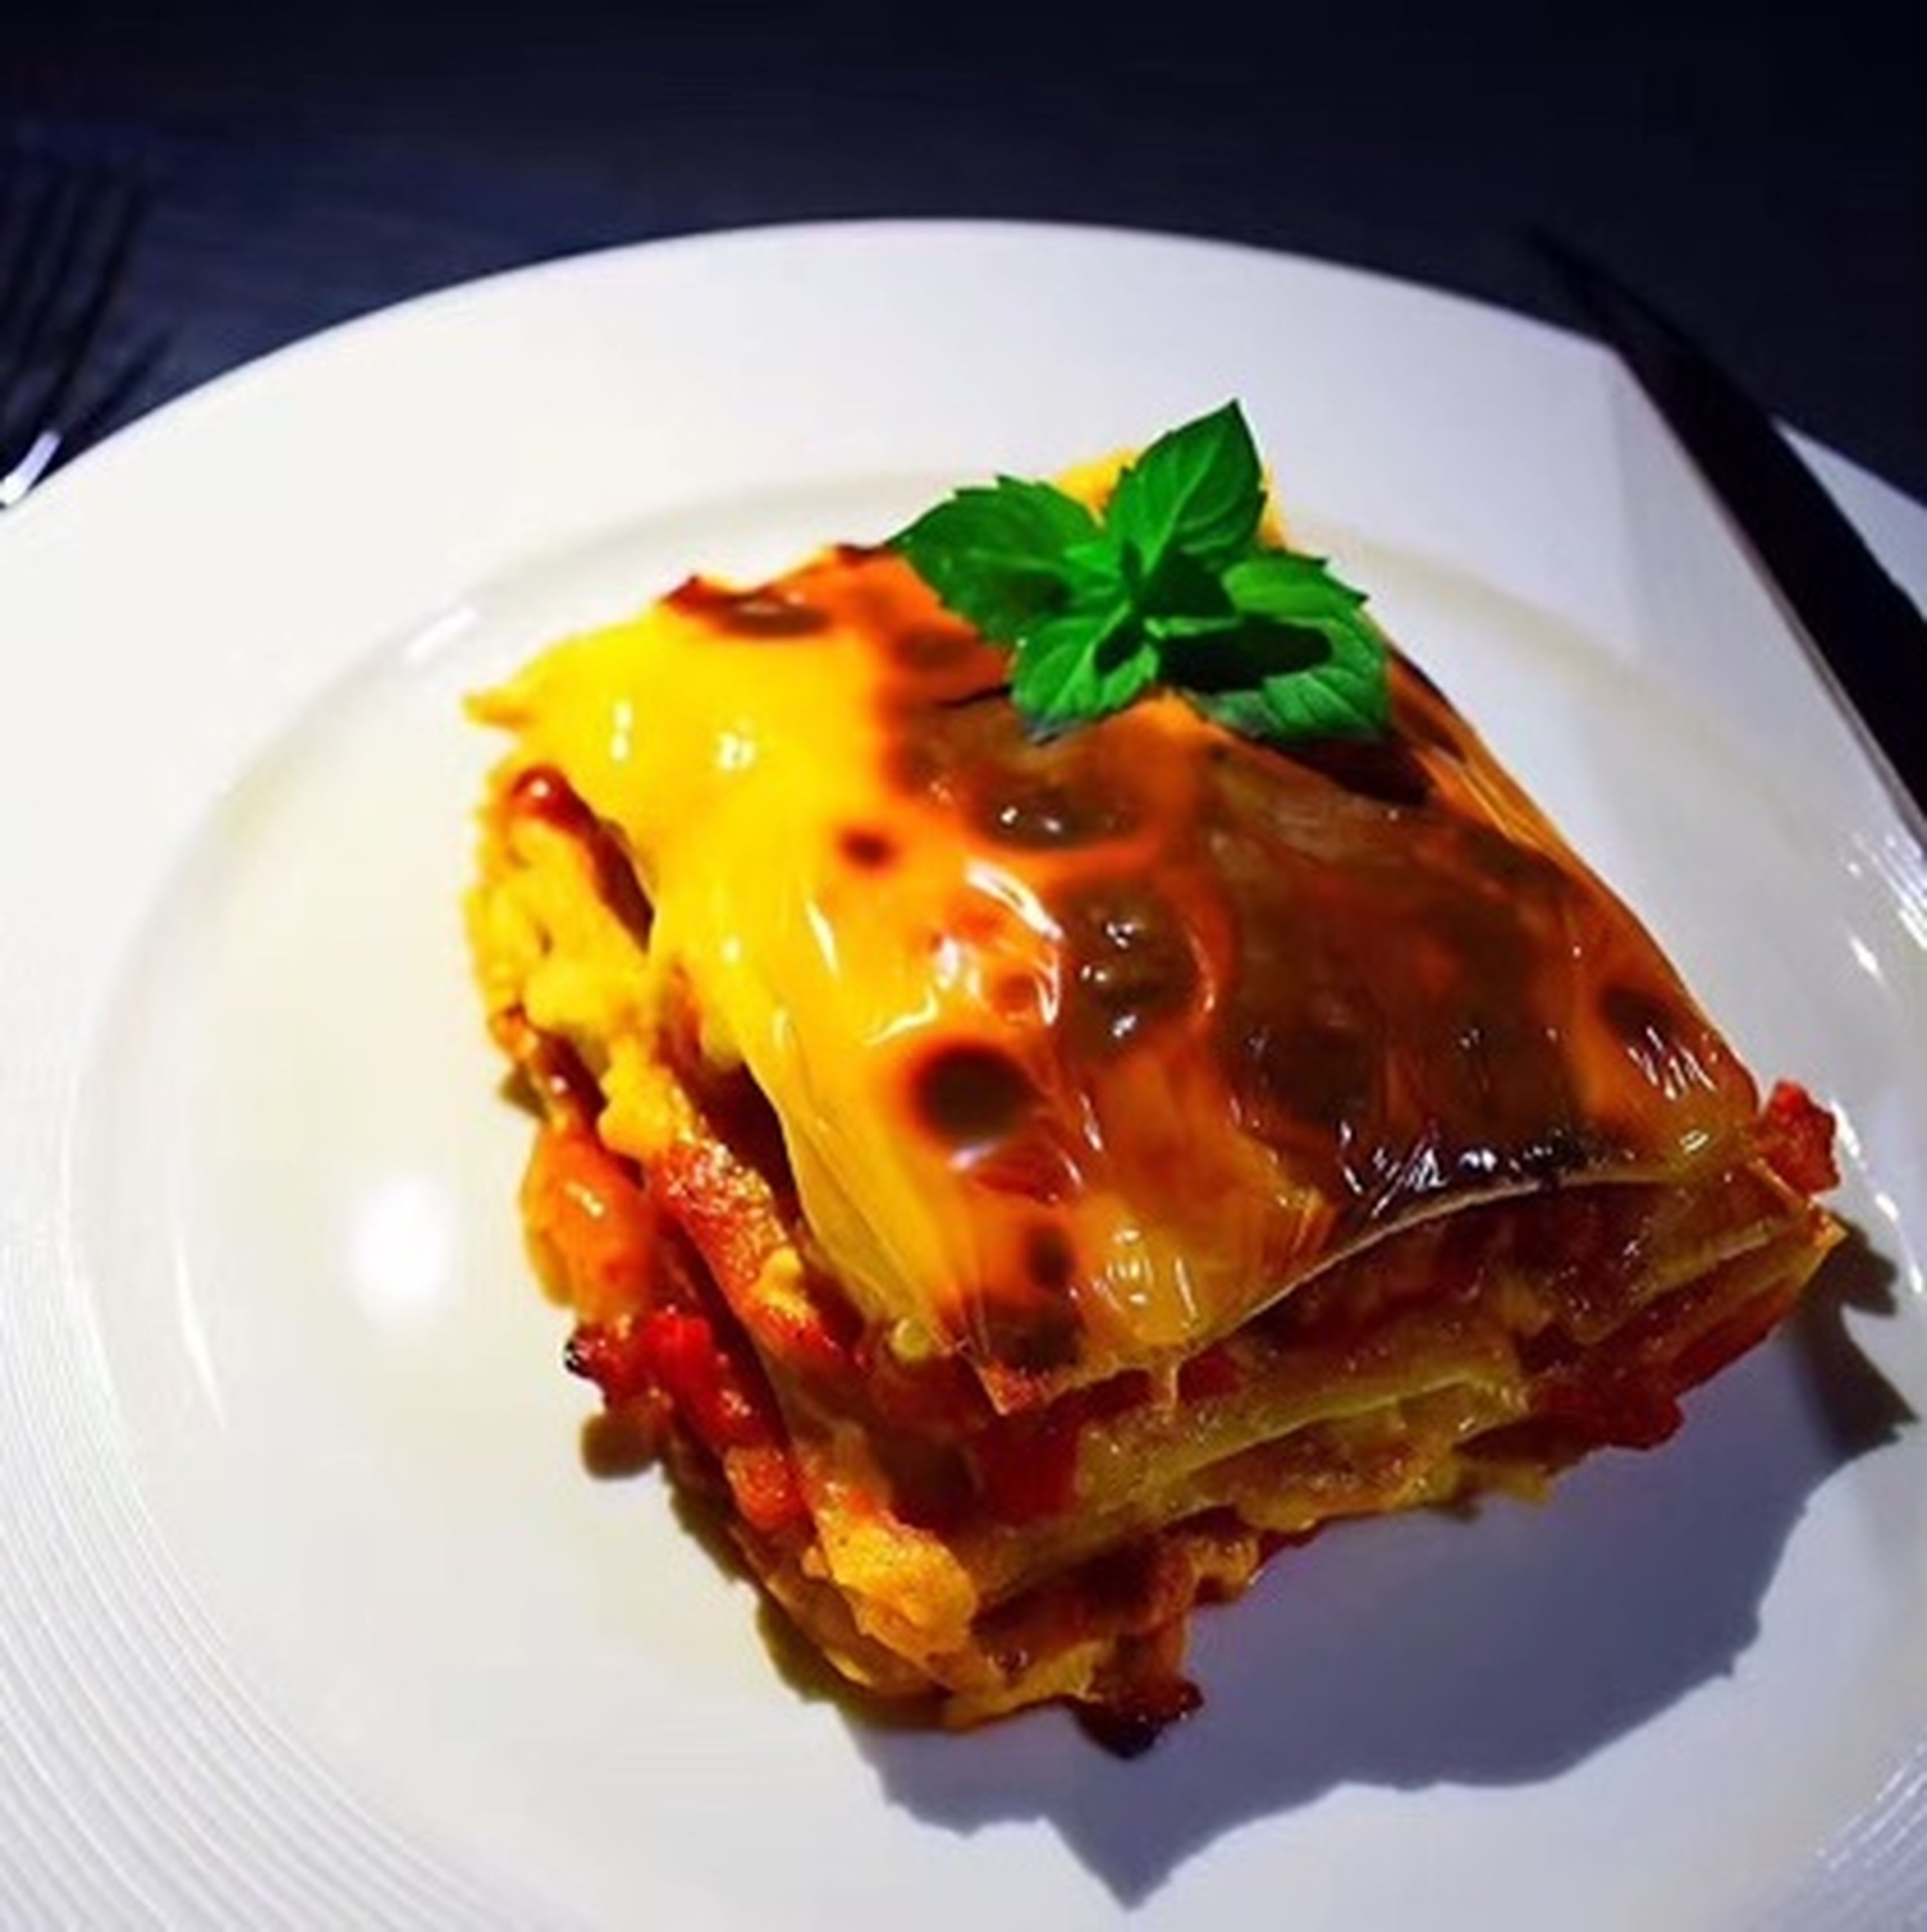 Classic Italian lasagna